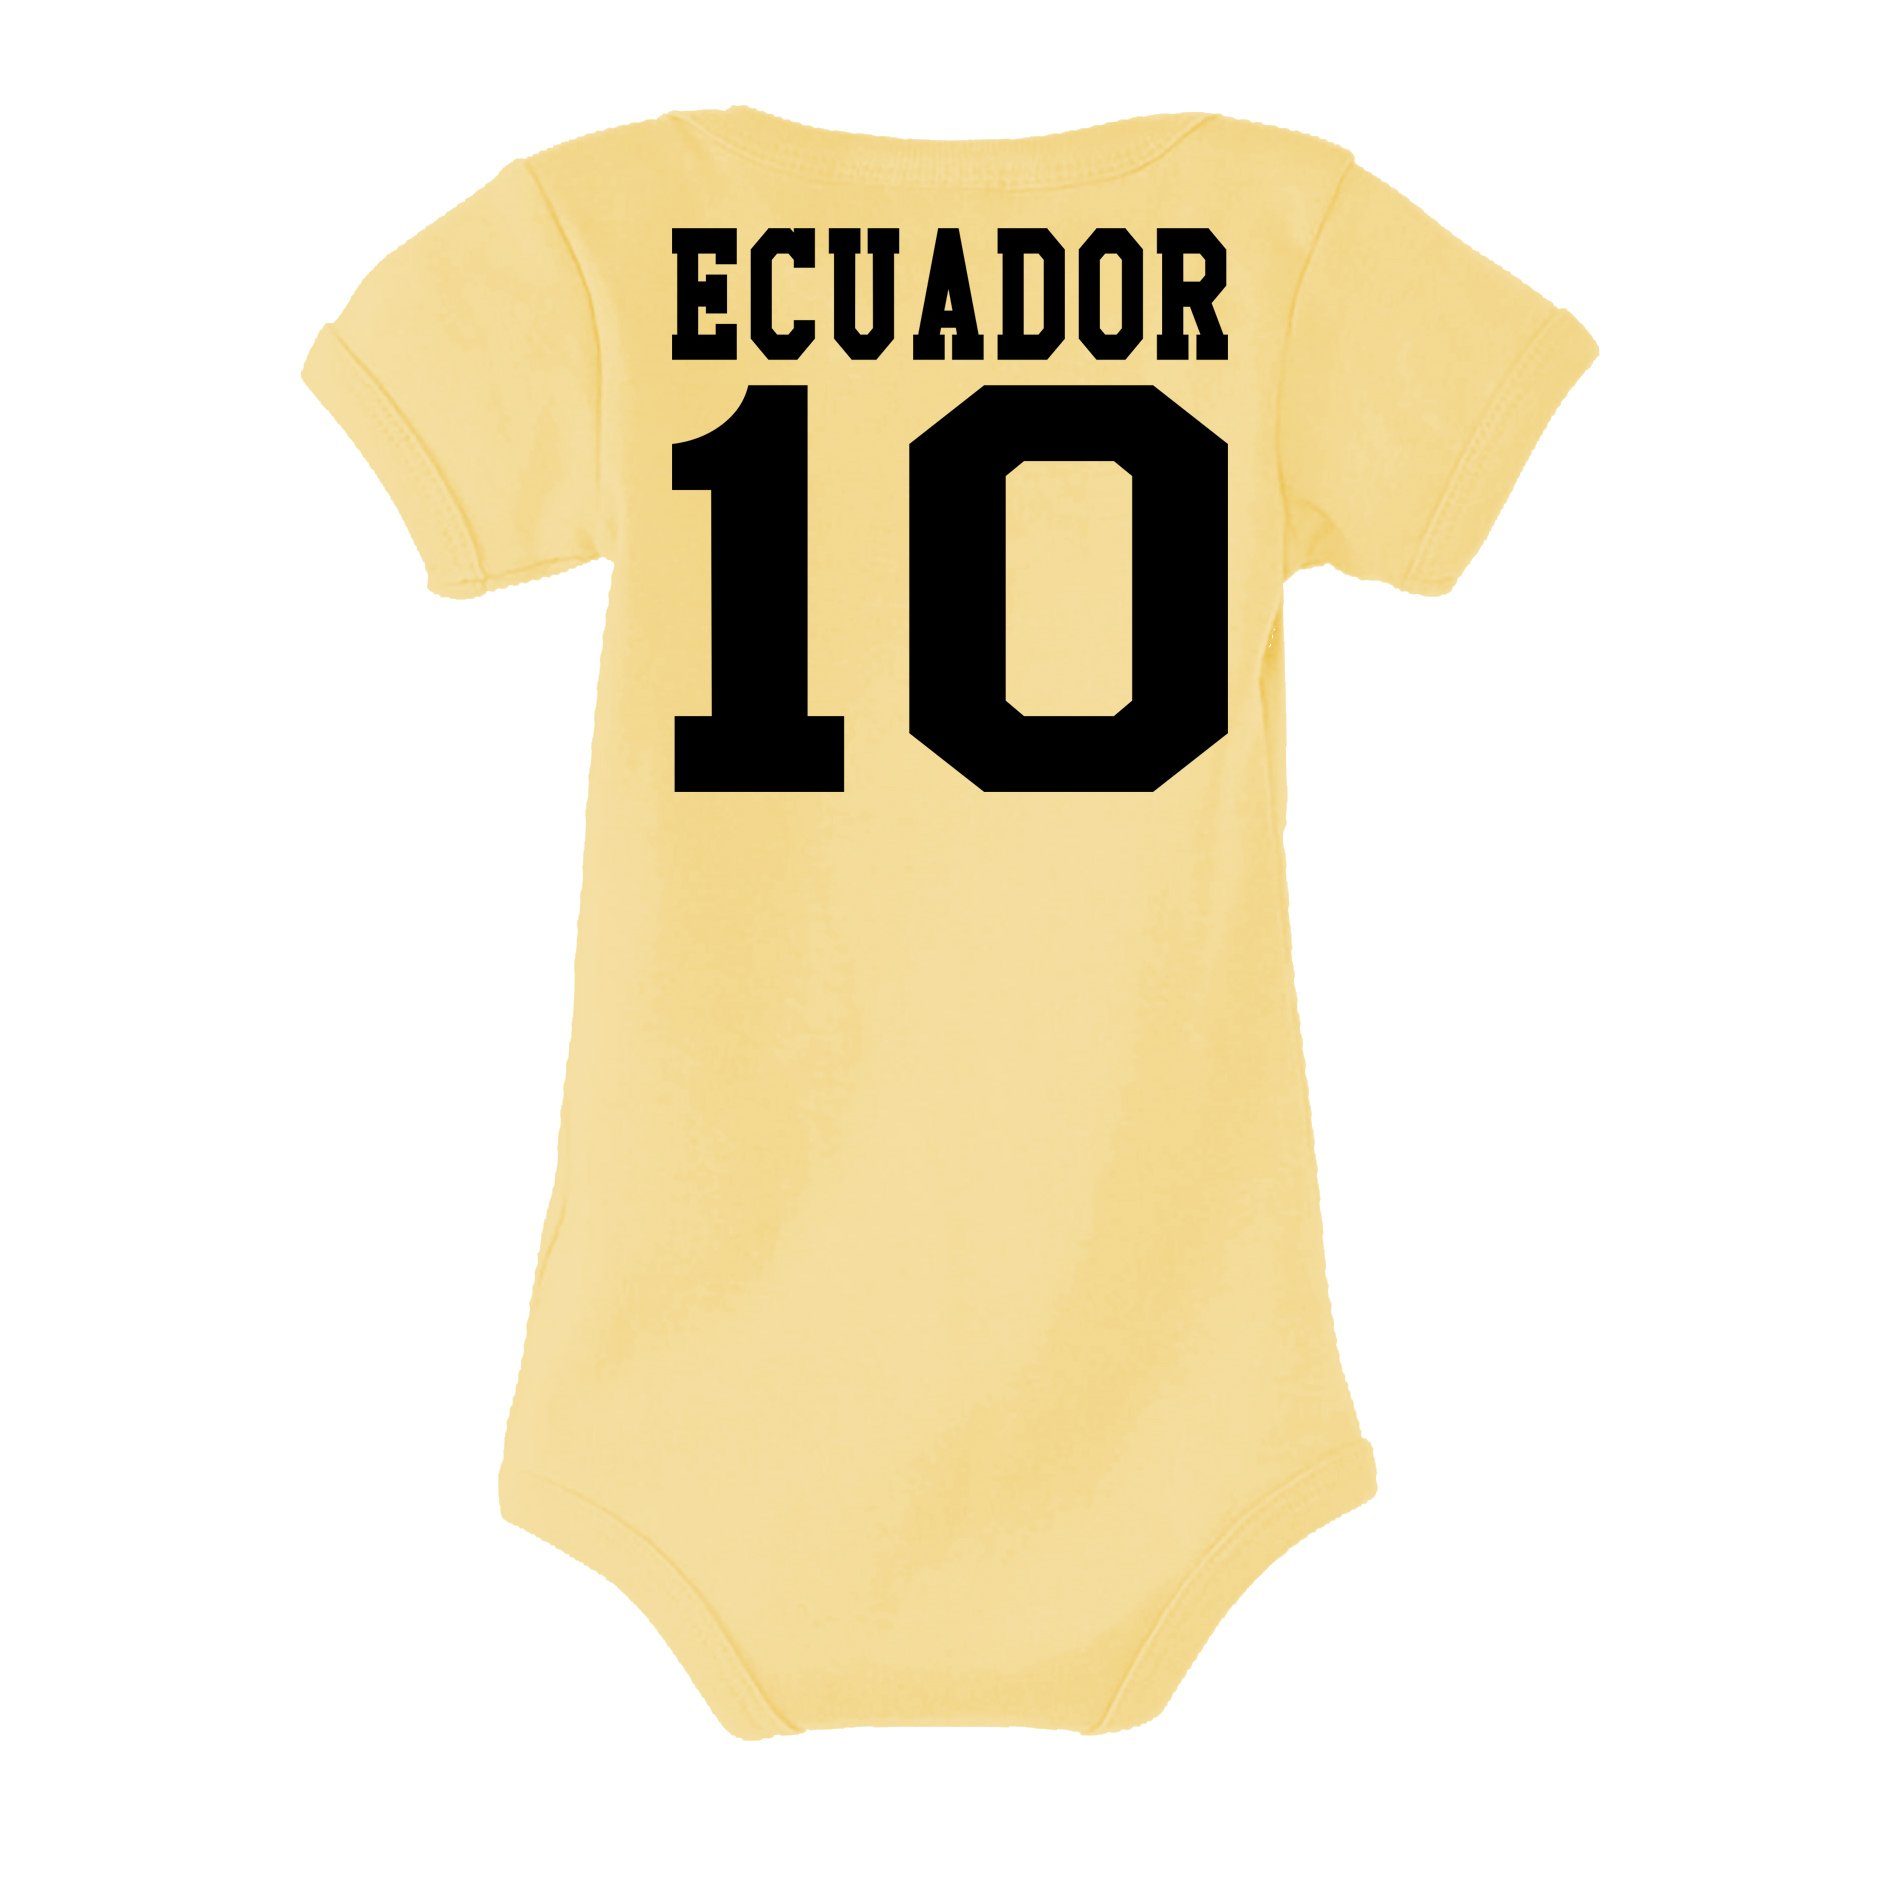 Trikot Baby Weltmeister Ecuador Kinder Sport Handball Fußball & Copa Strampler Blondie Brownie